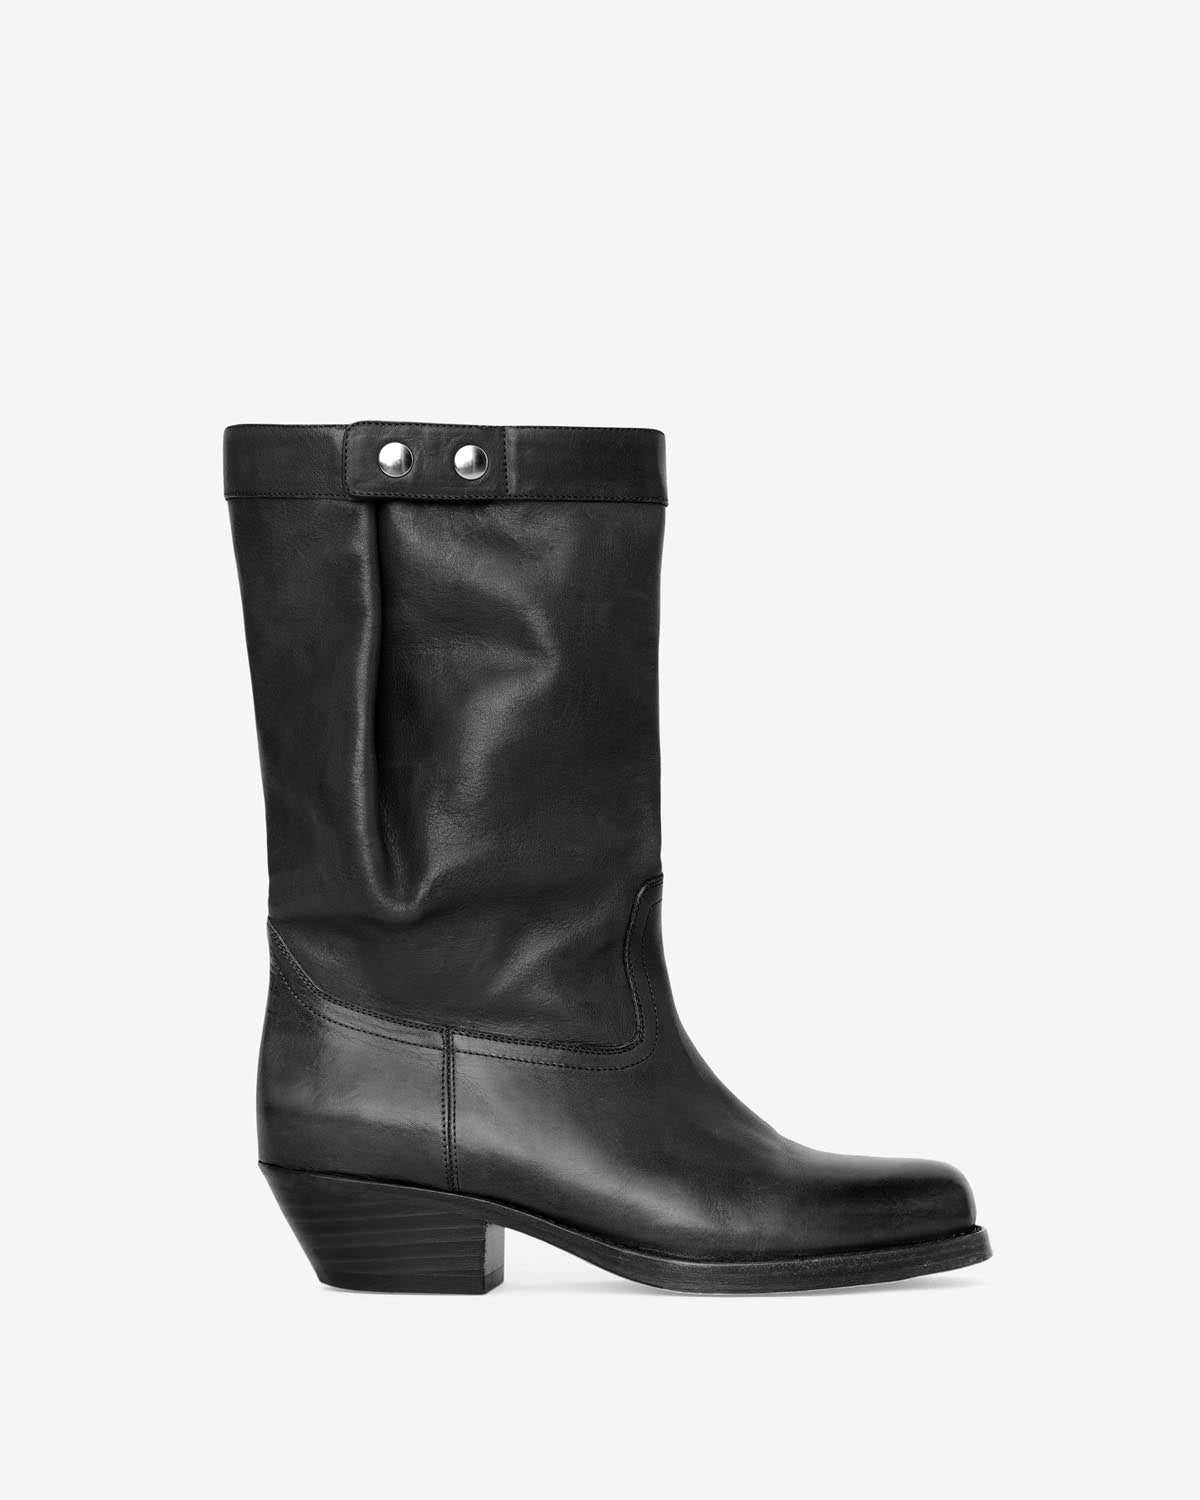 Boots ademe Woman Noir 5